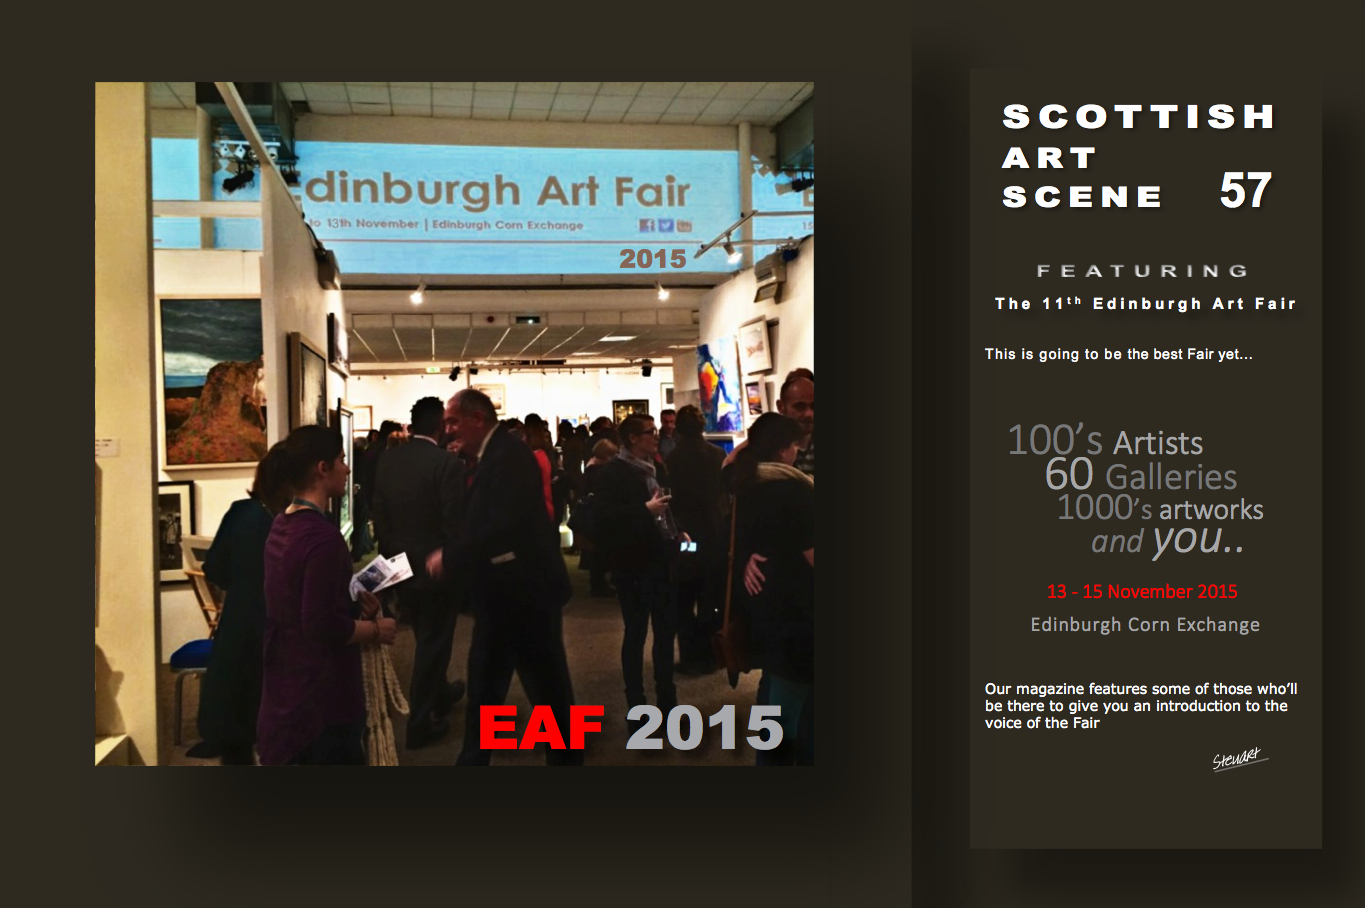 Scottish Art Scene: Edinburgh Art Fair